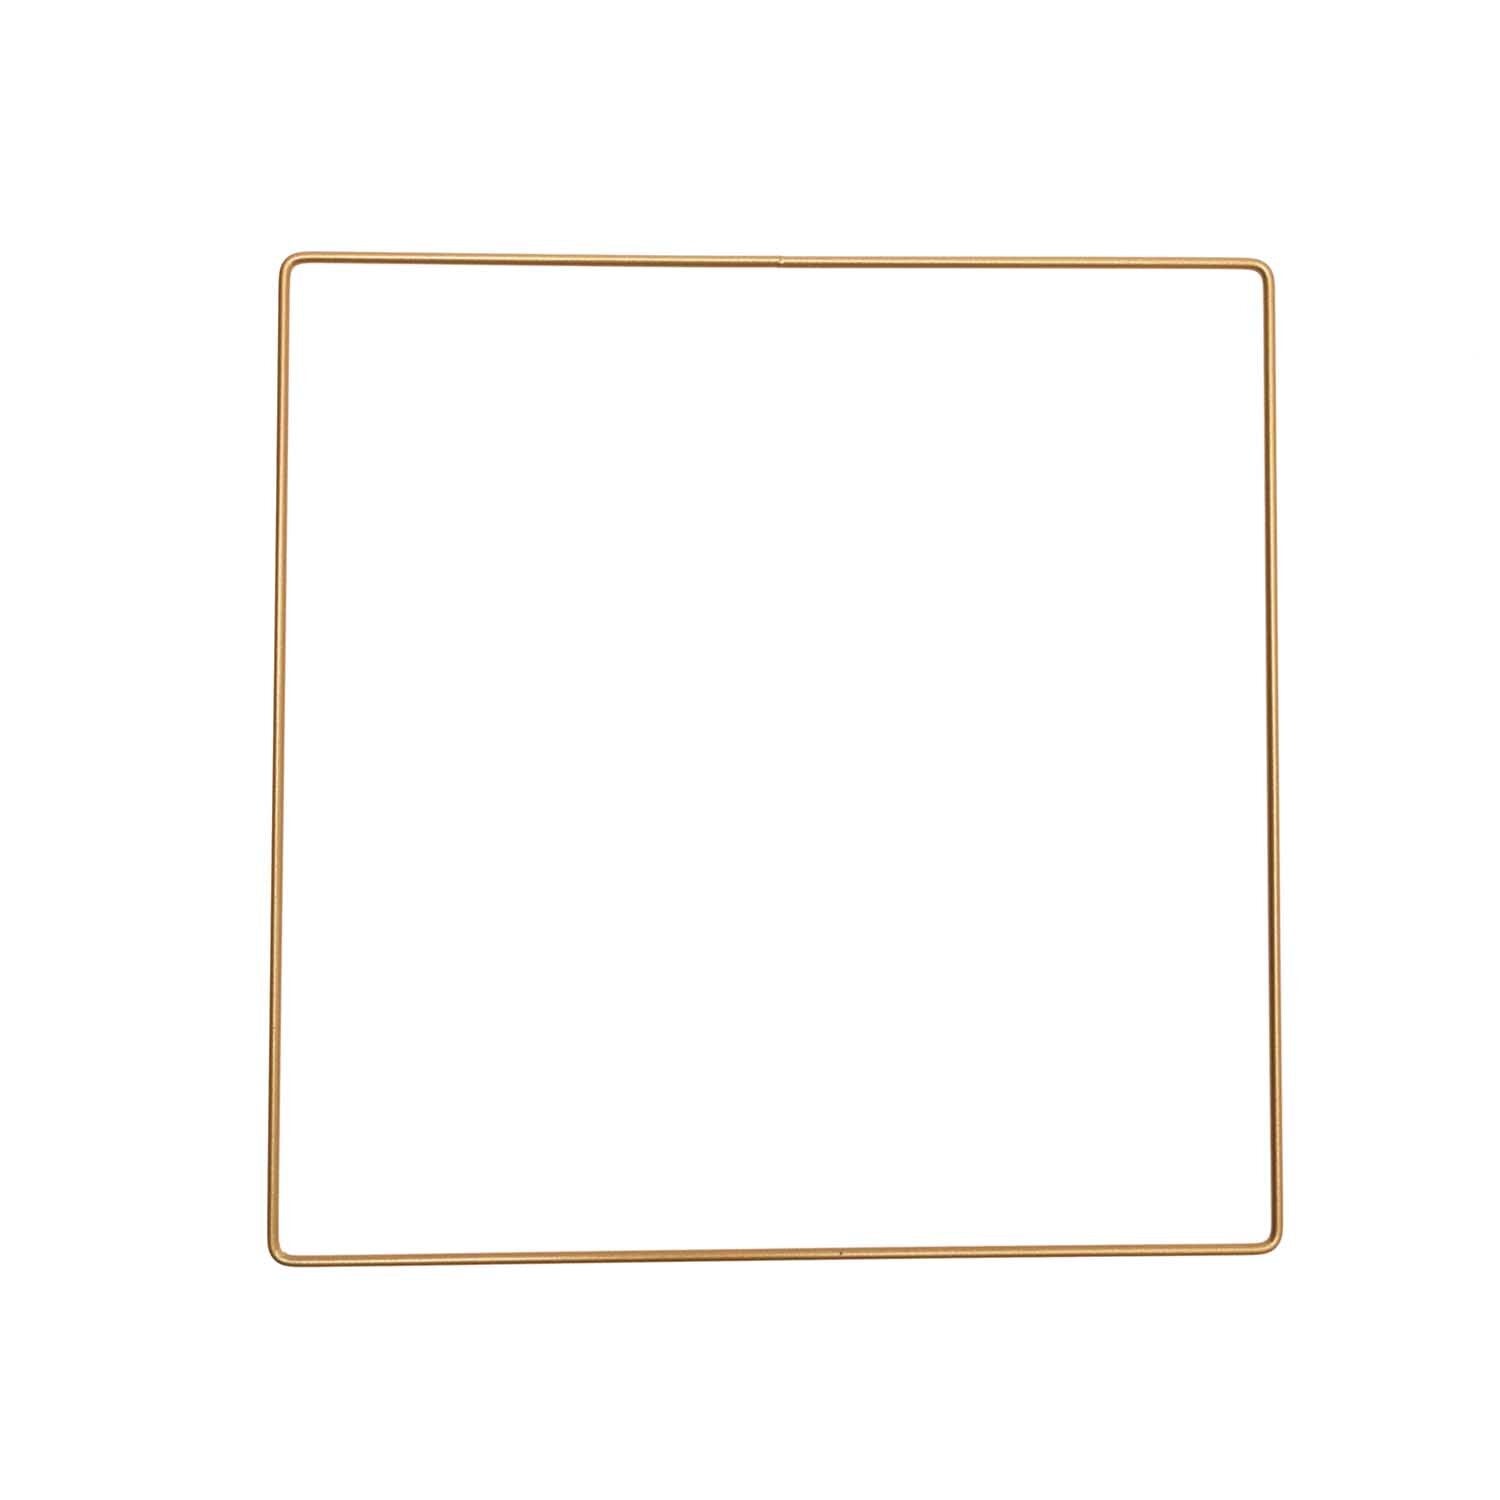 Gold Metal Weaving / Macrame Square Display Hoop (25cm) - Stitch Happy.